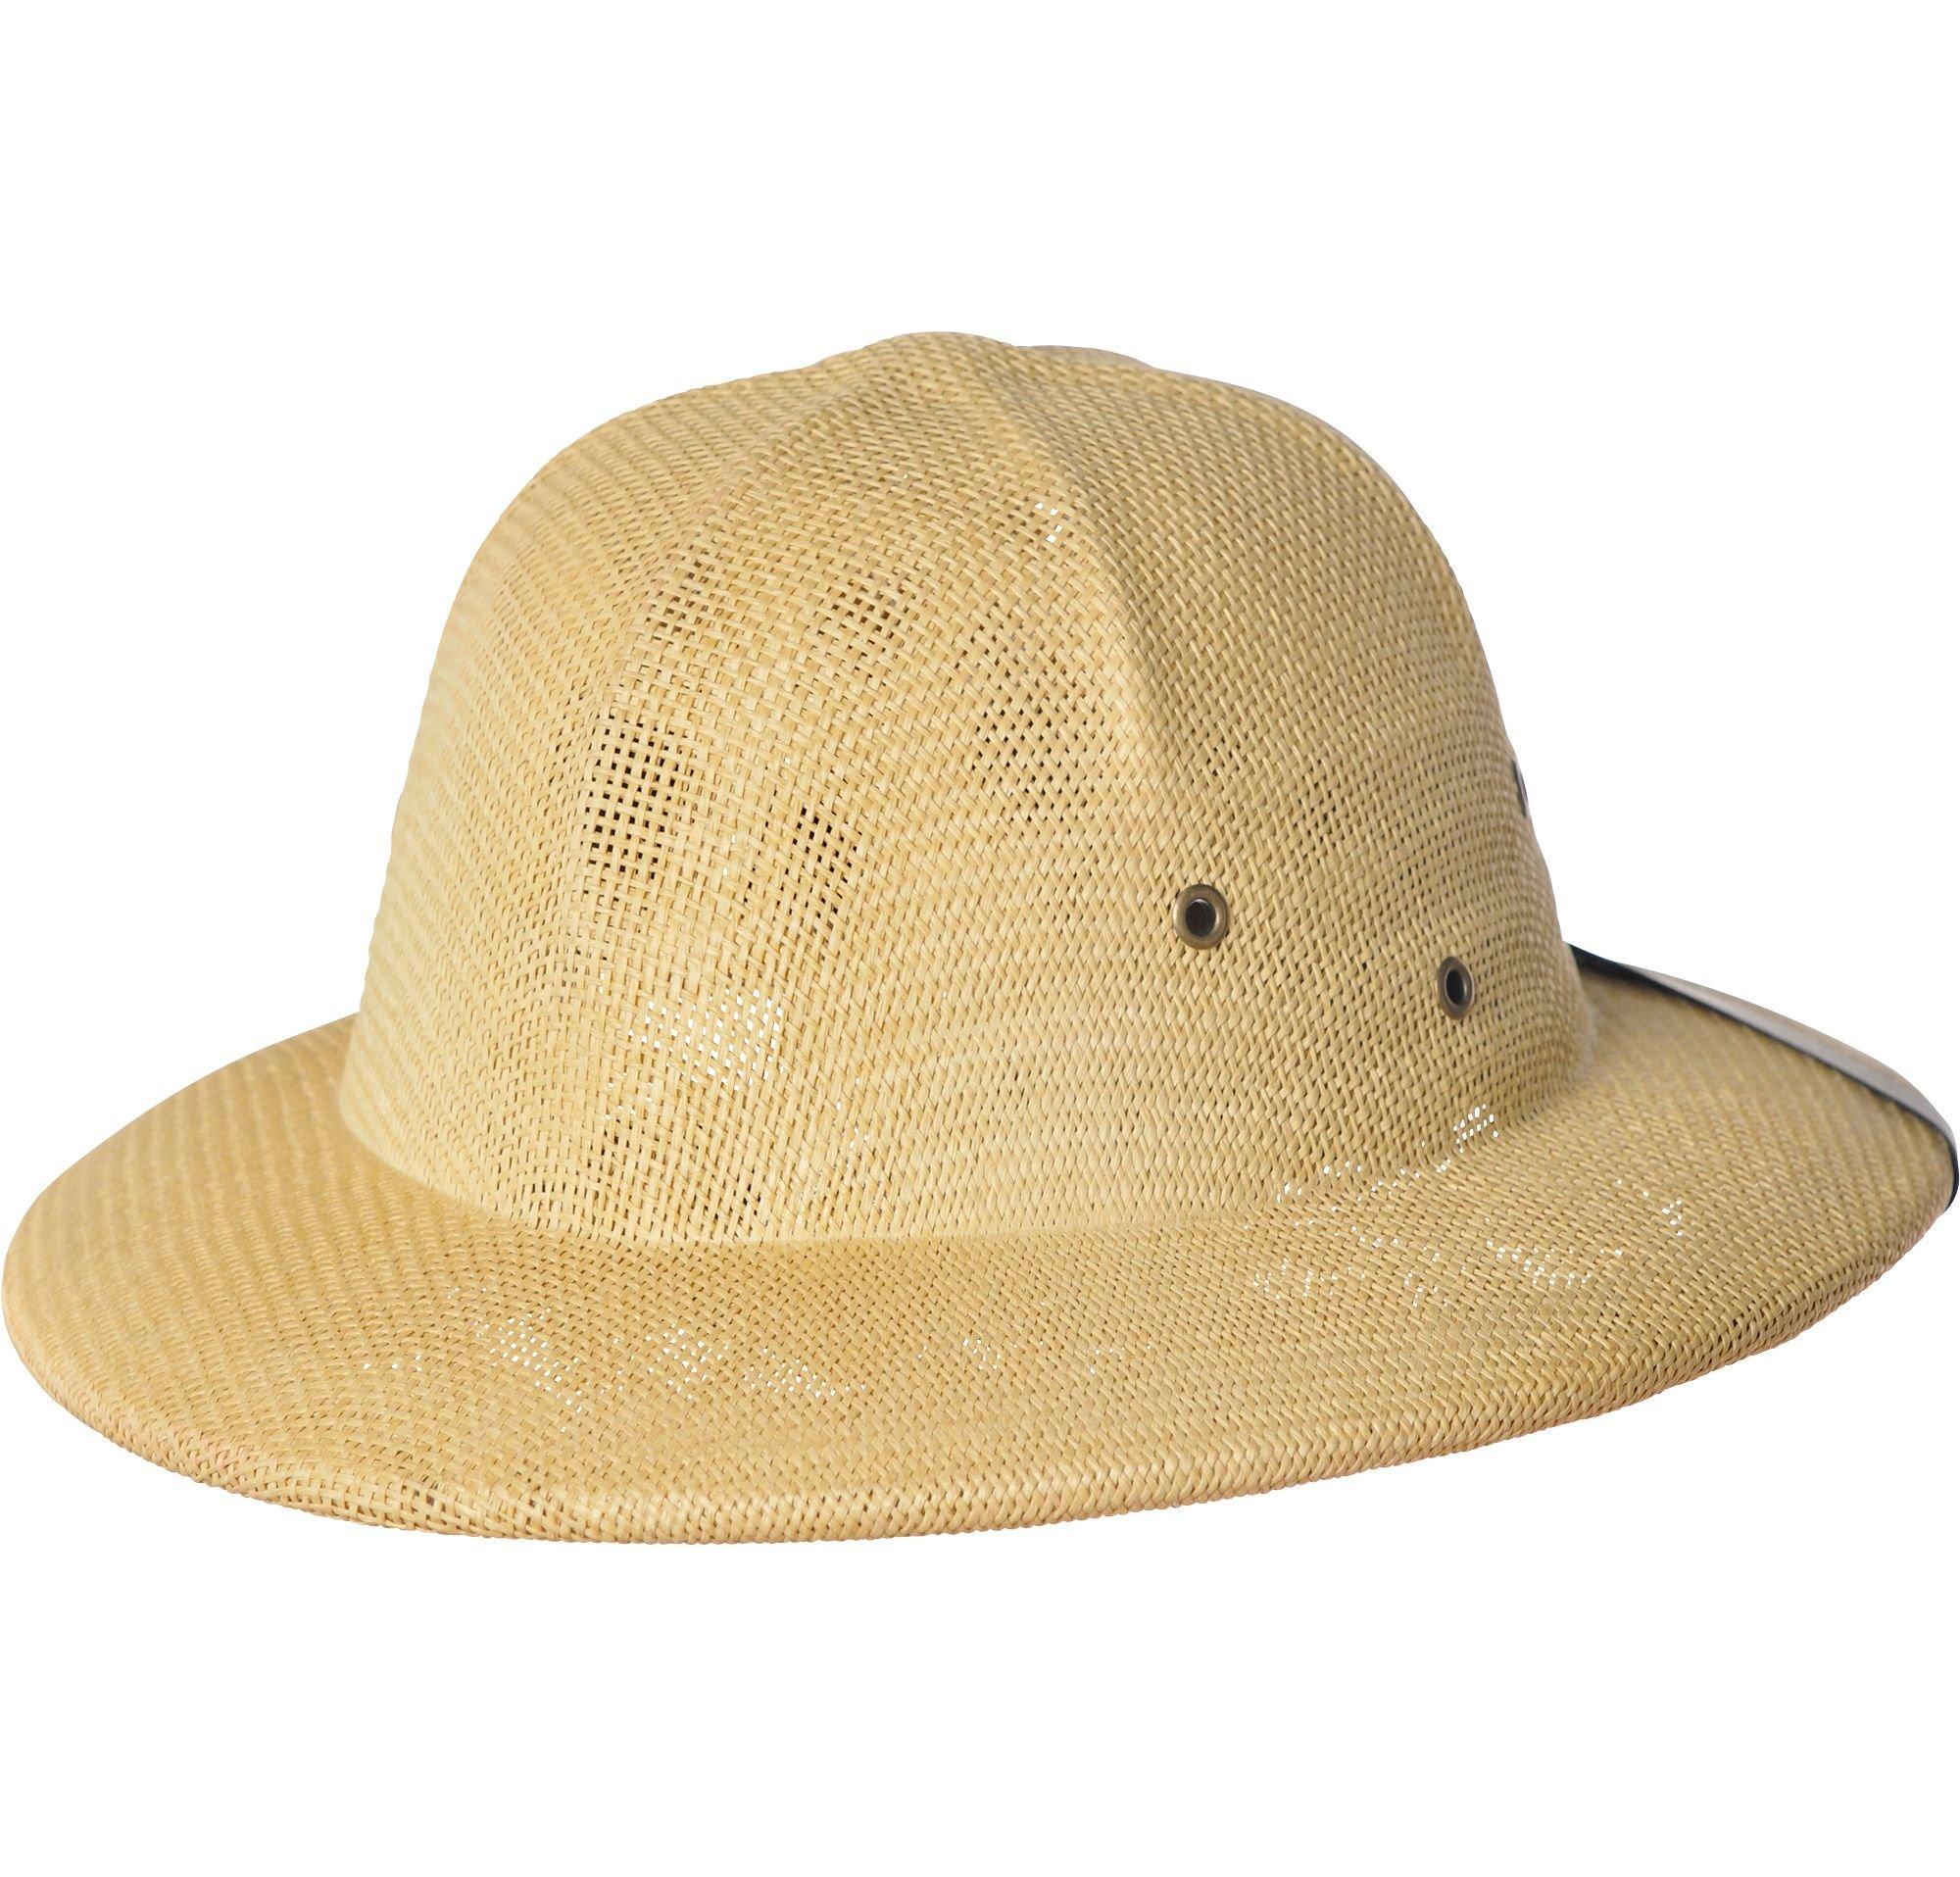 Leather Patch Hats - Safari Sun